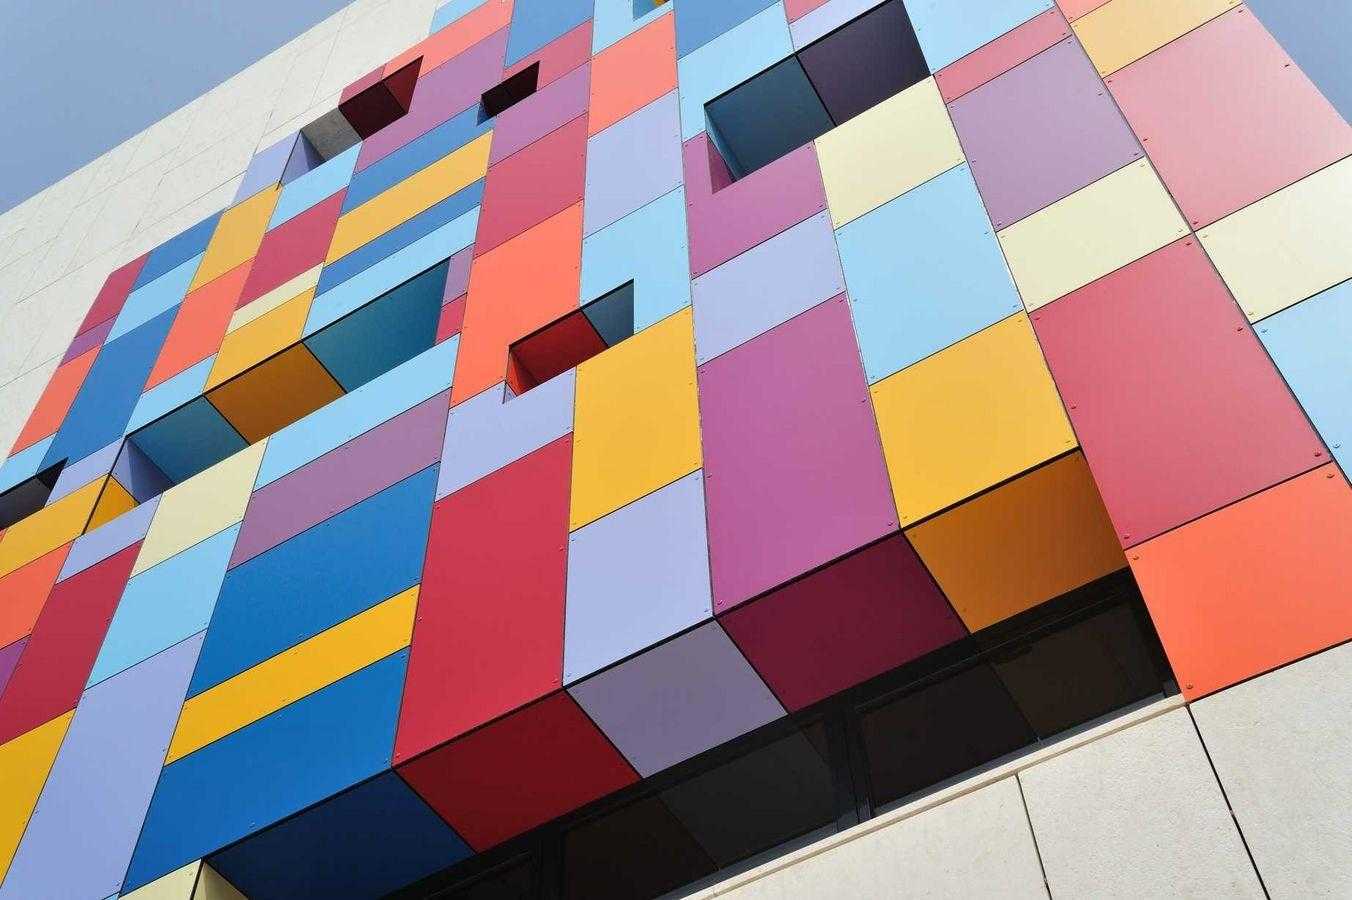 Alumunium Composite Panel pada fasad bangunan (Sumber: www.kmldesignerfinishes.com